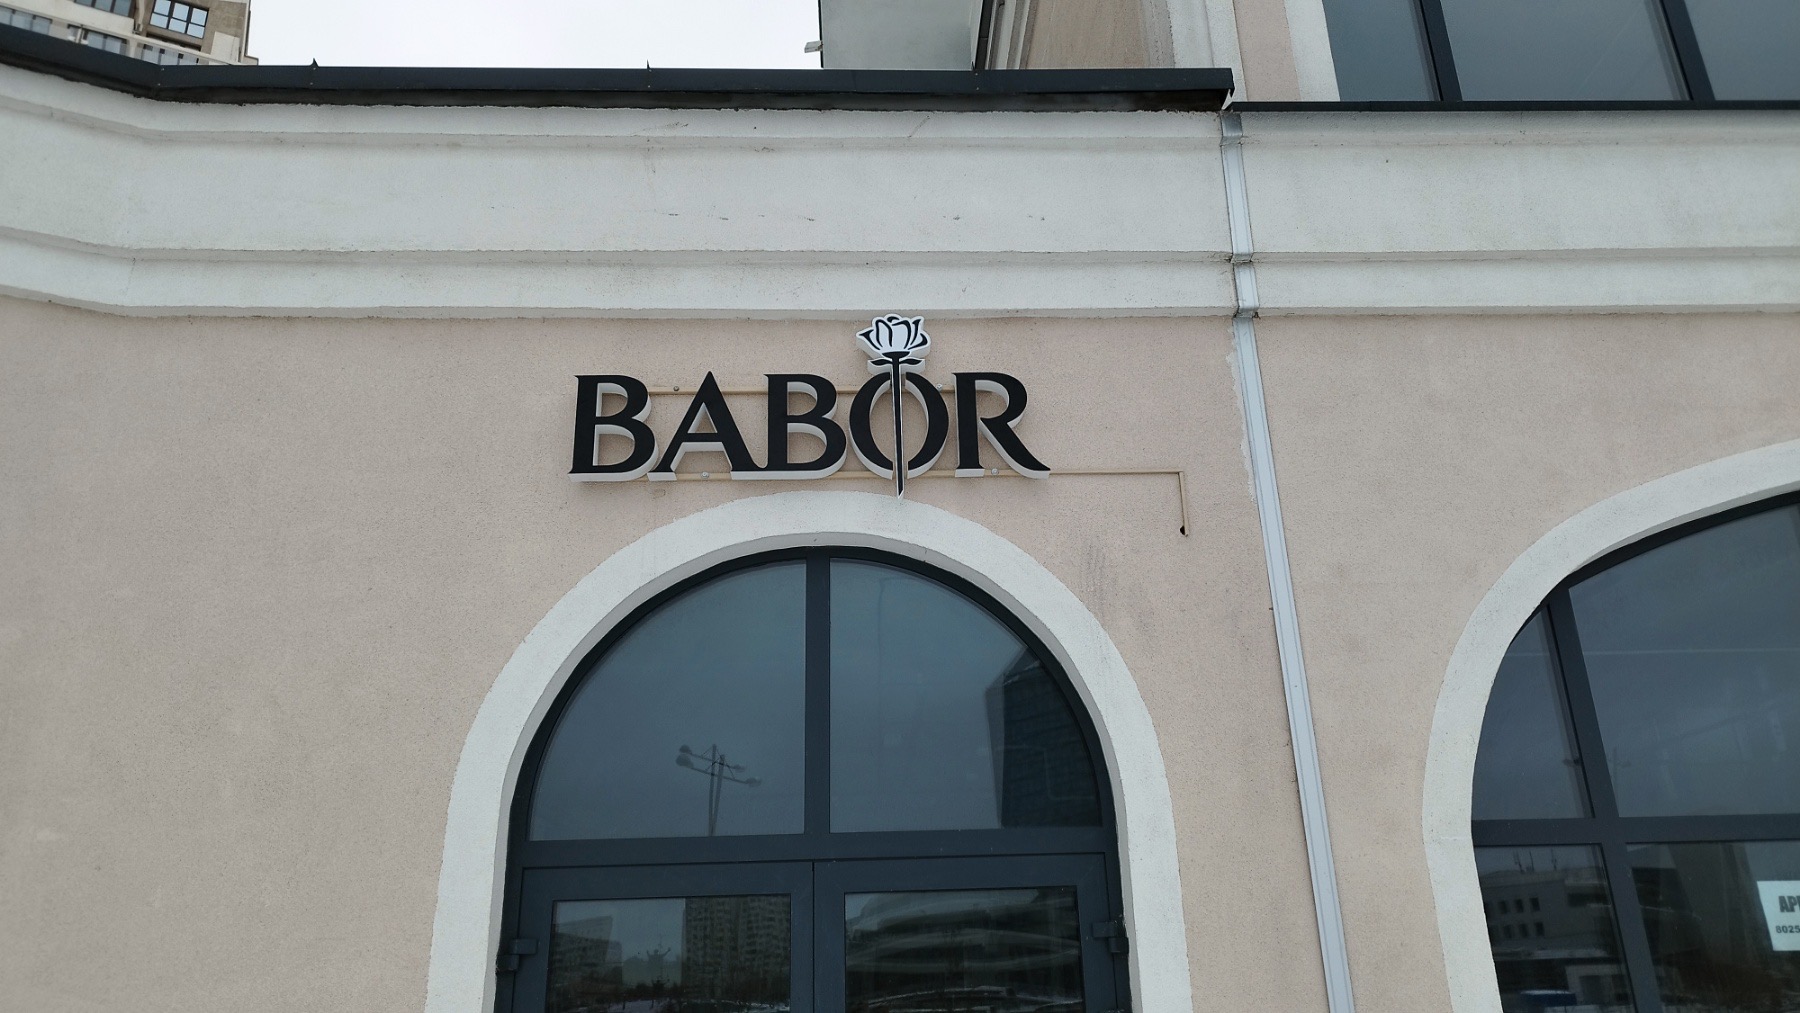 babor